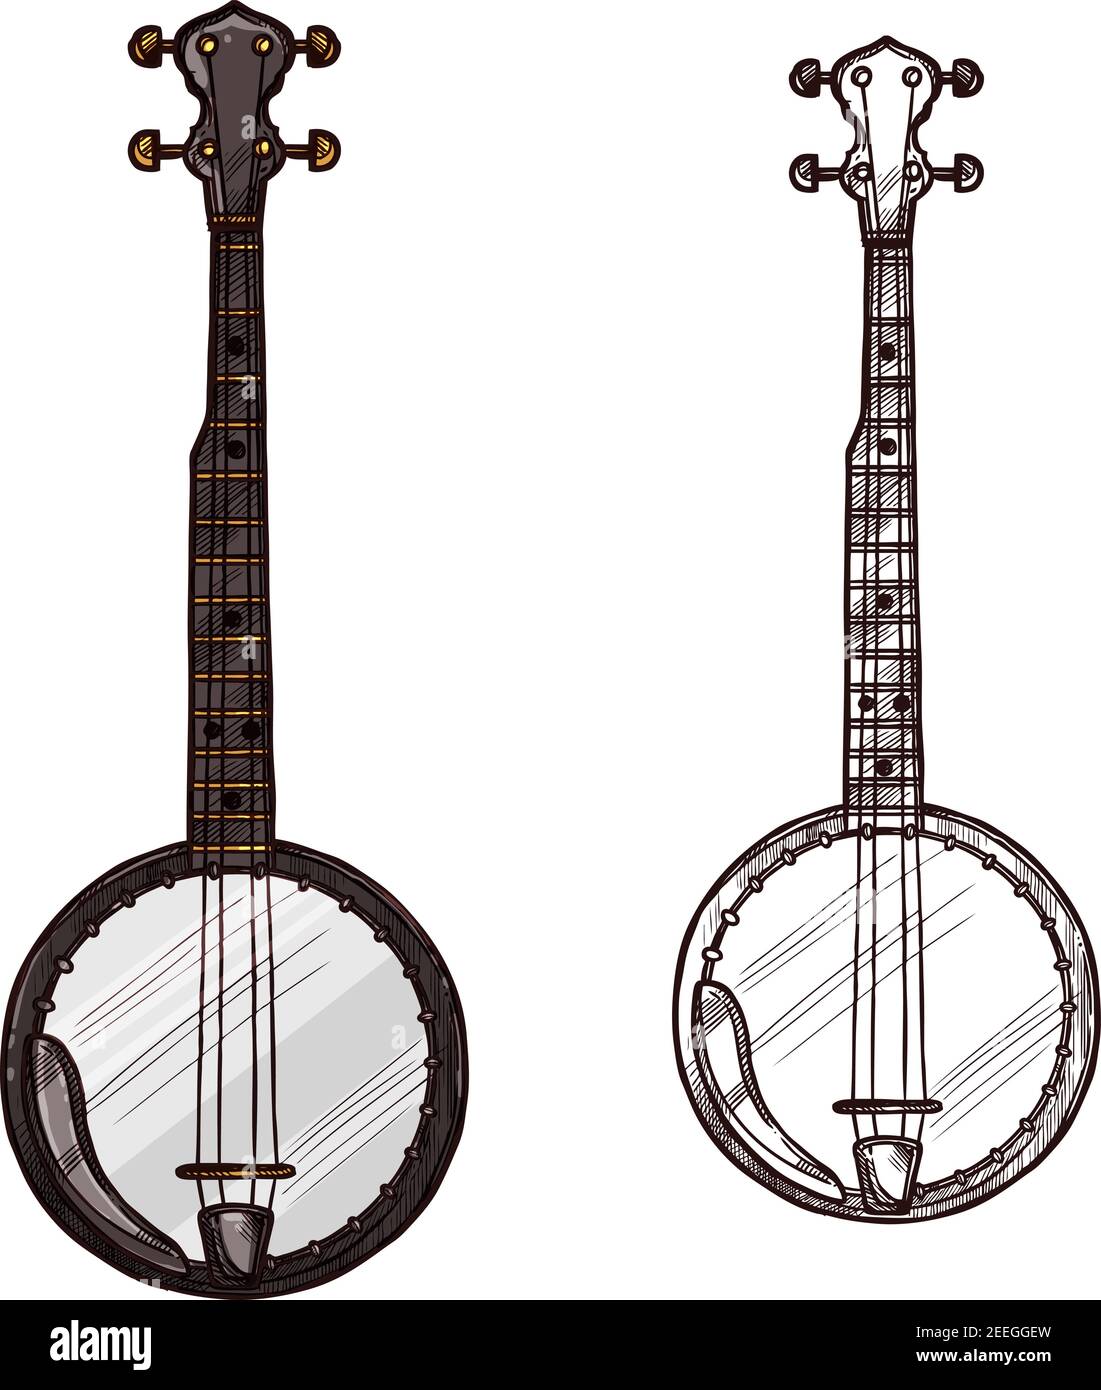 Instrumento musical de cuerda de guitarra banjo. Vector sketch símbolo de  folk o guitarra nacional de tipo pucking con tres cuerdas para música  étnica concierto o Imagen Vector de stock - Alamy